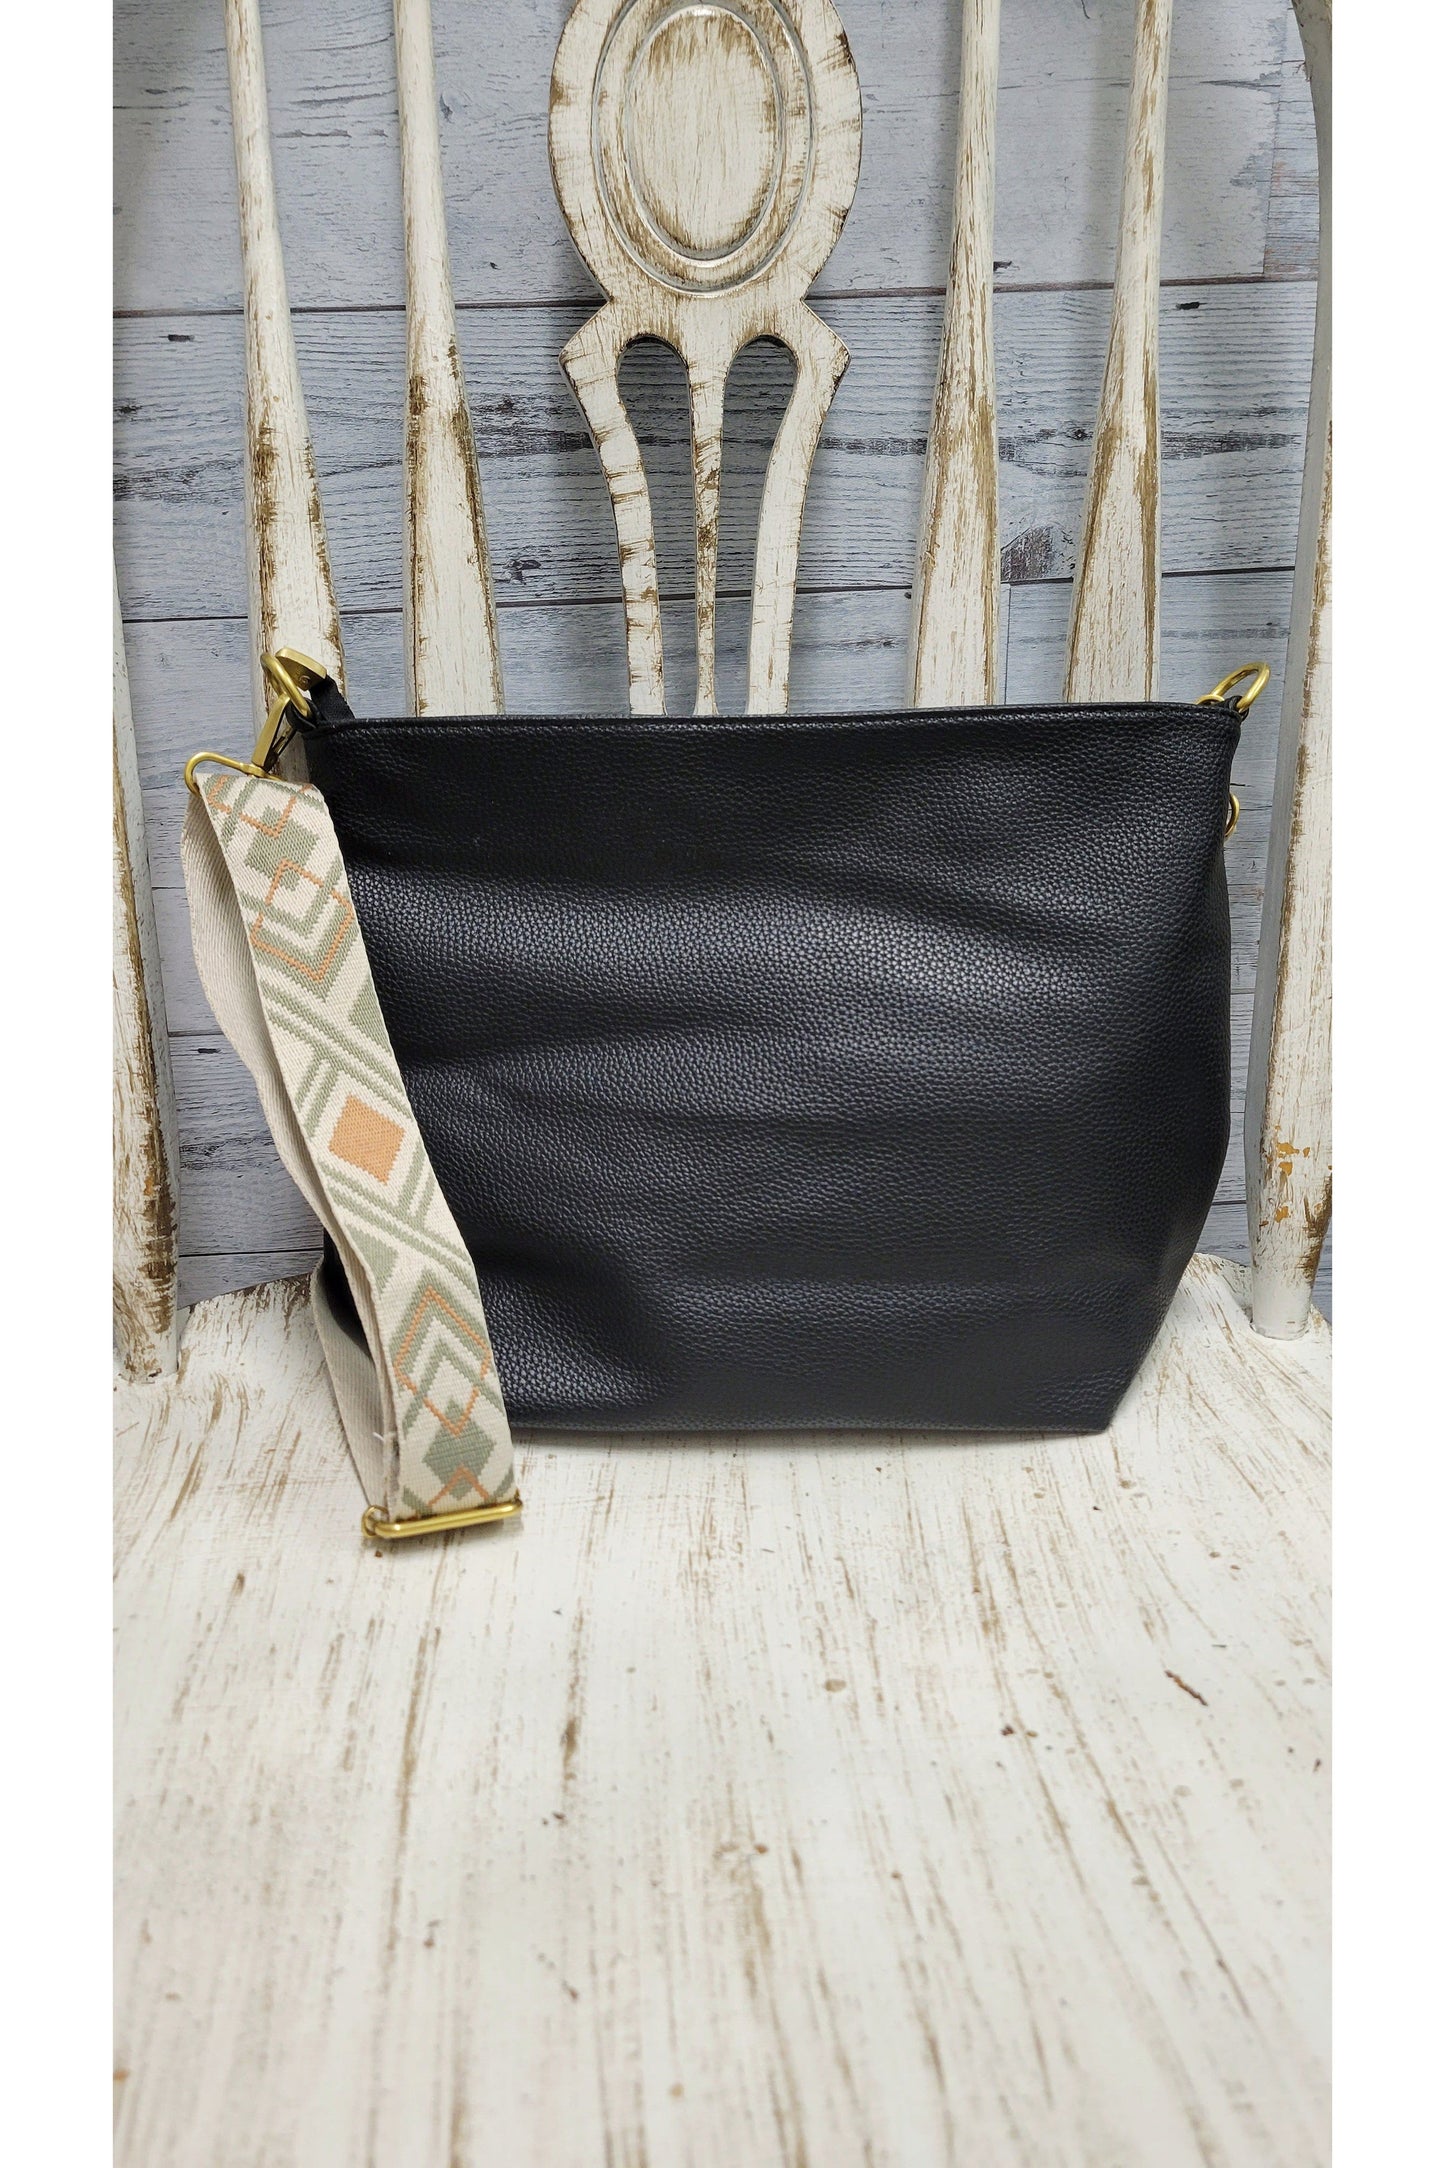 Adored Leather Shoulder Bag in two Colors-Bag-Revive Boutique & Floral-Black-Revive Boutique